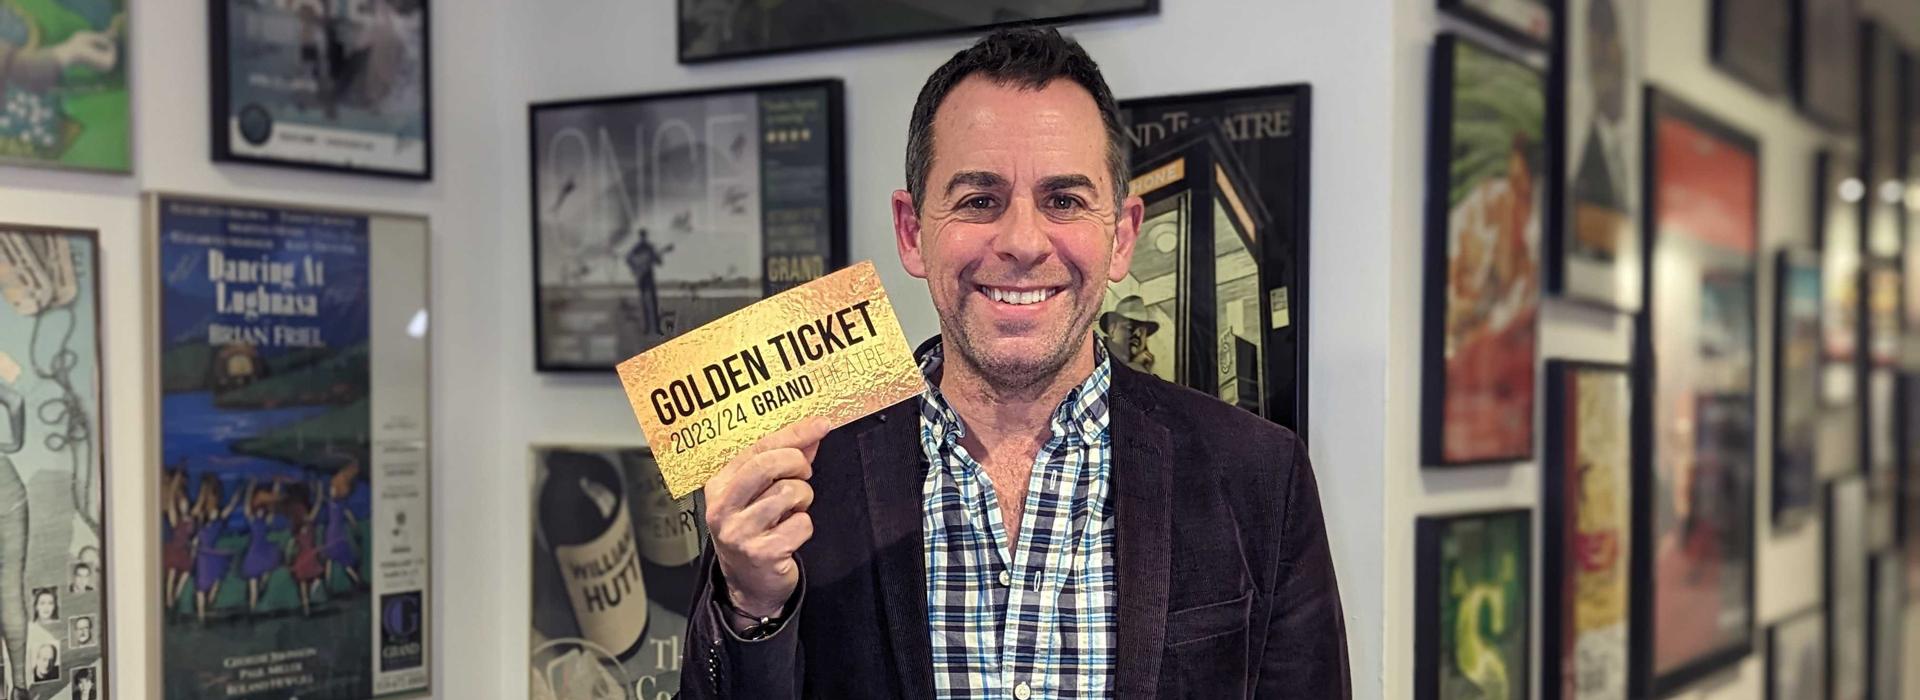 Dennis Garnhum smiles as he holds up a golden ticket.